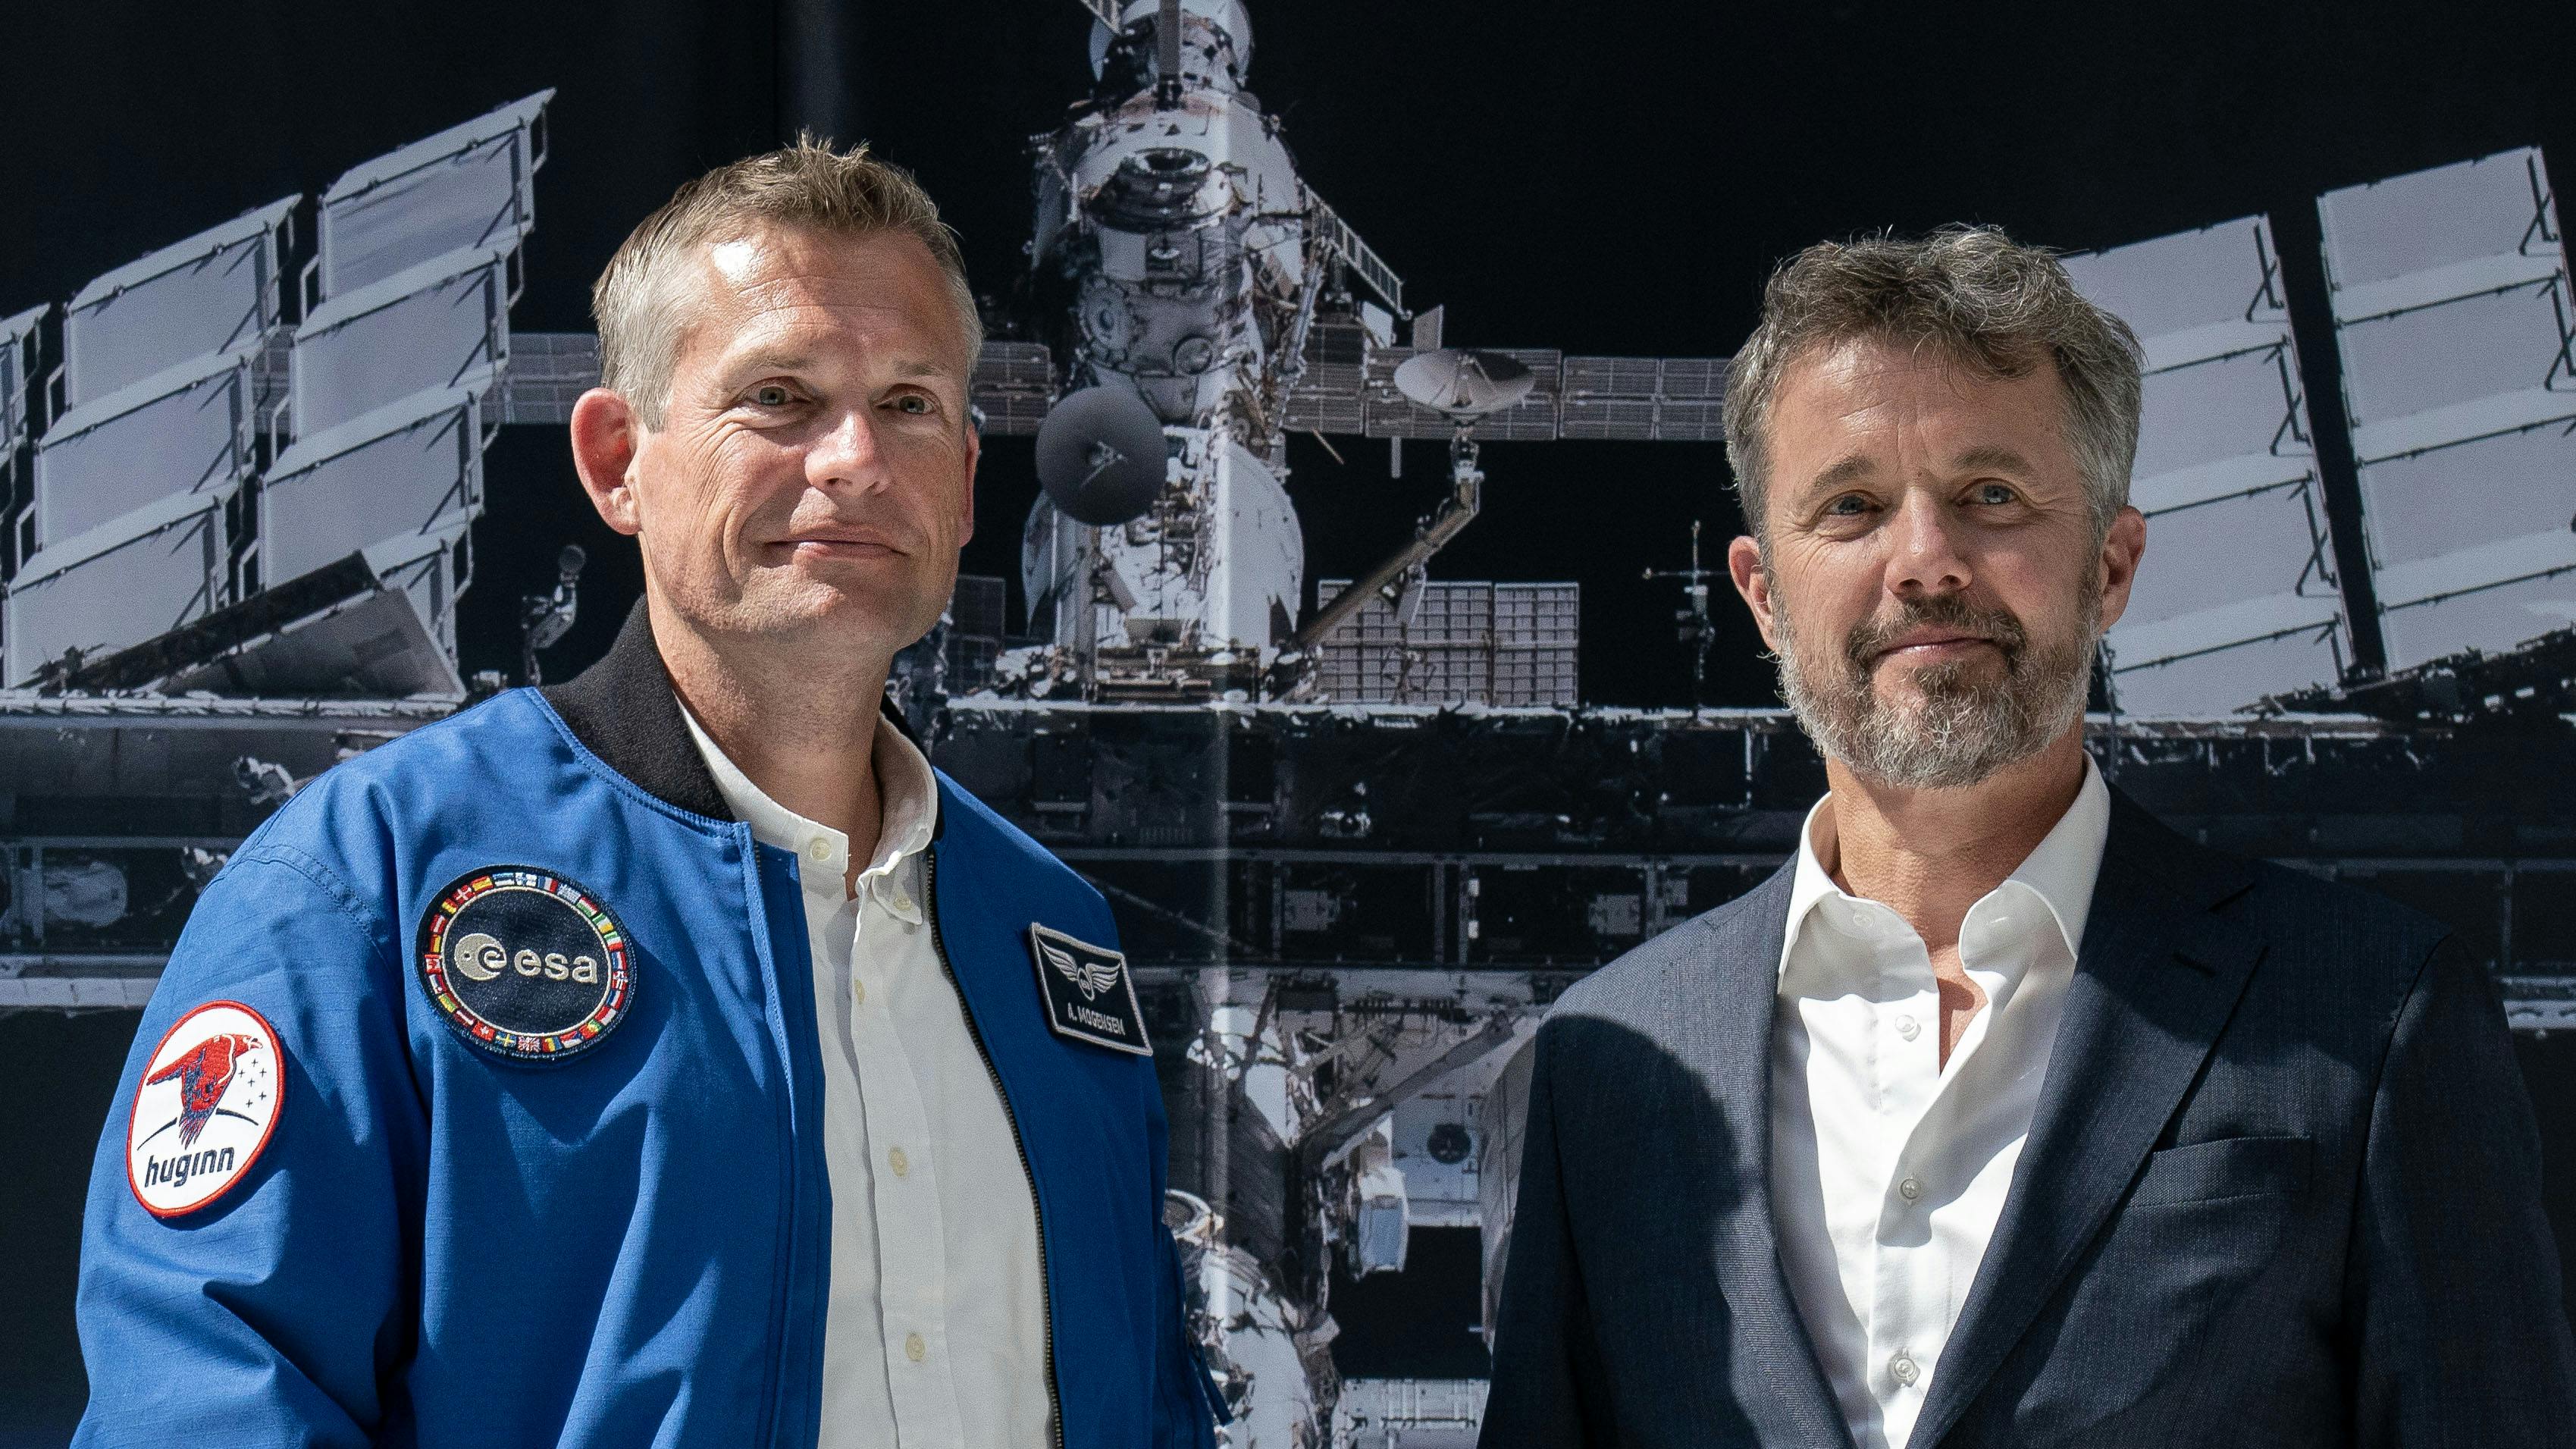 Kronprins Frederik fik en god snak med astronaut Andreas Mogensen i Industriens Hus.
